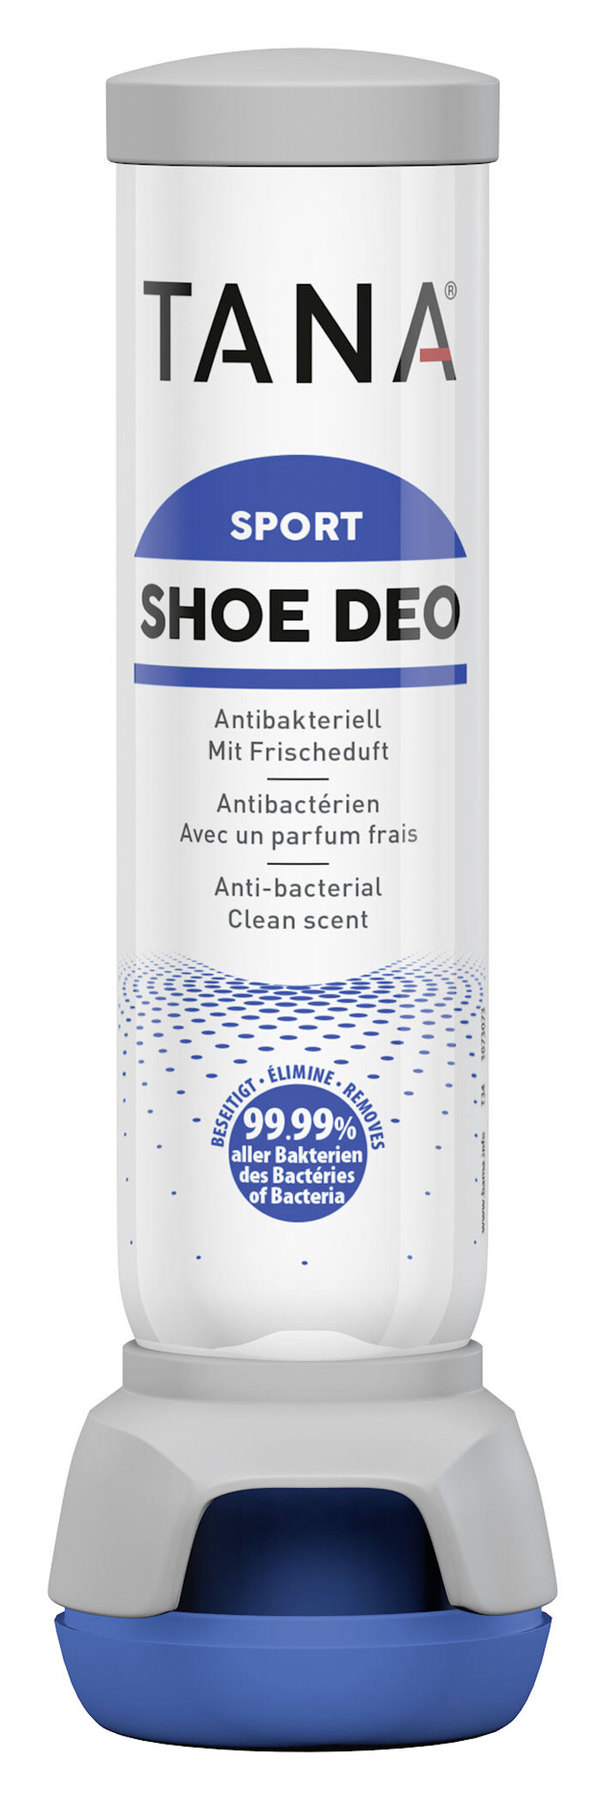 TANA Shoe Deo antibakteriell mit Frischeduft 100ml